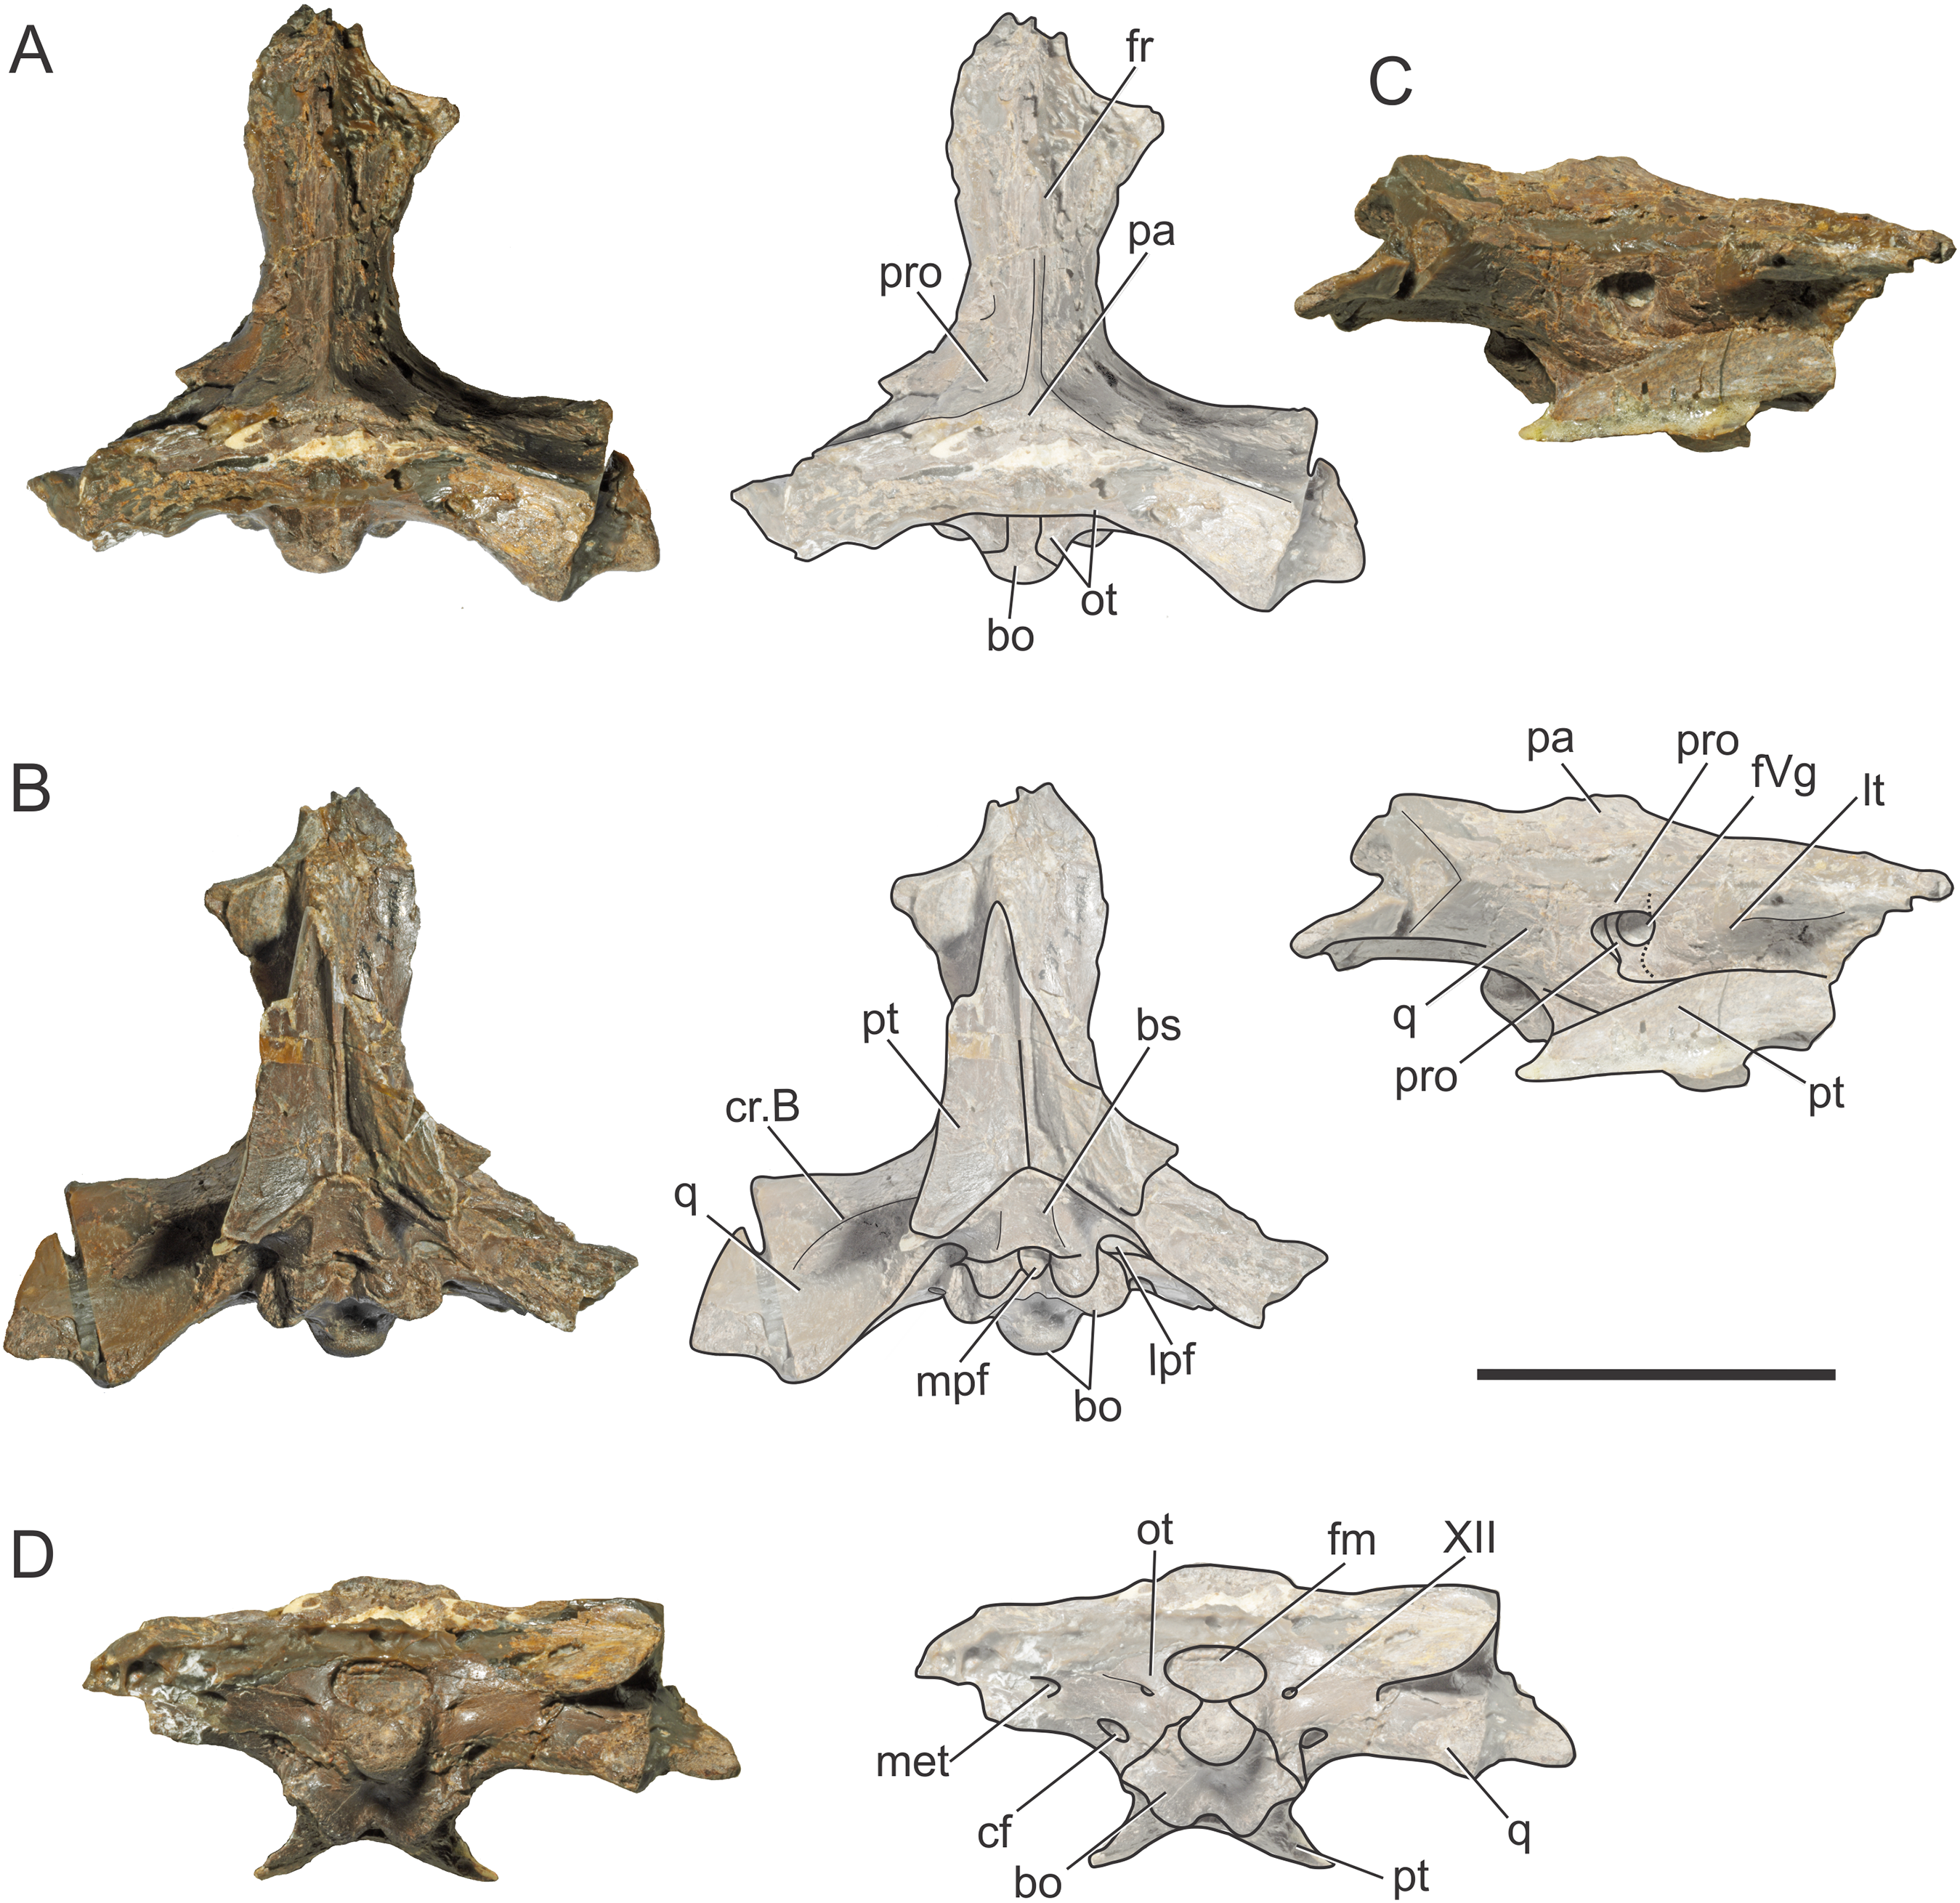 Braincase anatomy of extant Crocodylia, with new insights into the